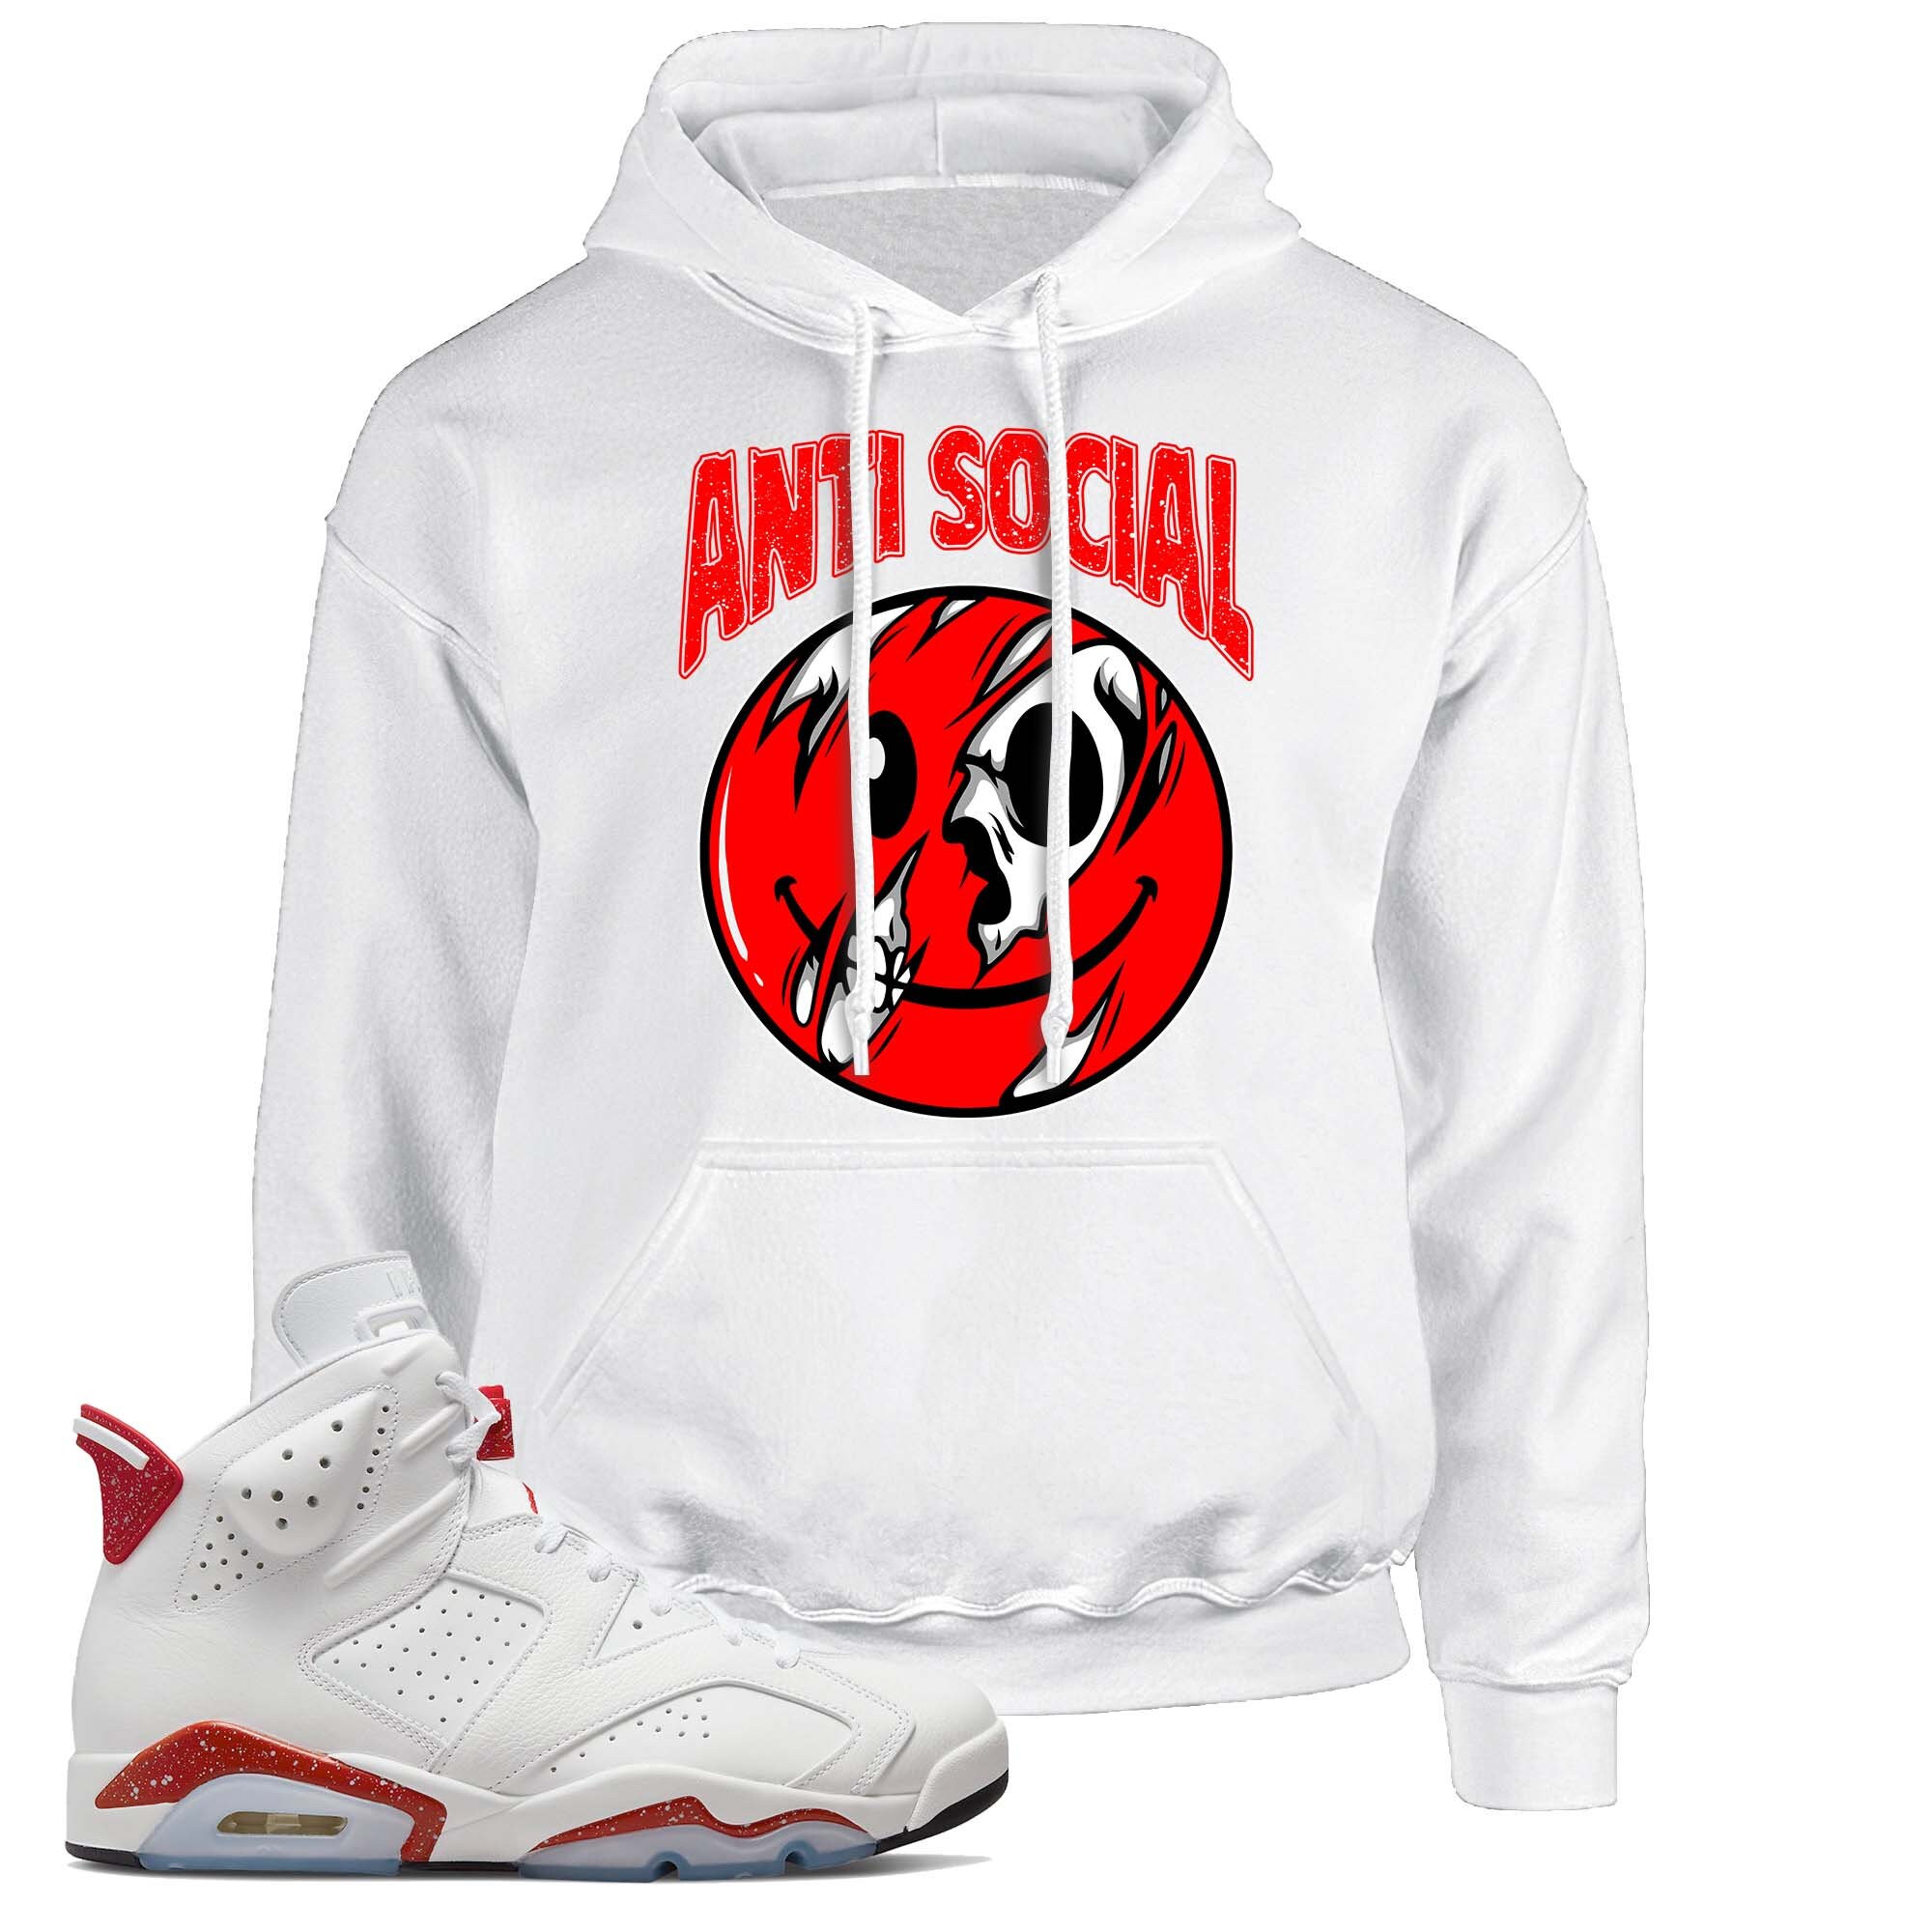 Anti Unisex Pullover Hoodie to Match Air Jordan 6 Retro Red Oreo Sneakers | AJ6 Retro Red Oreo 6s Sweatshirt Hooded